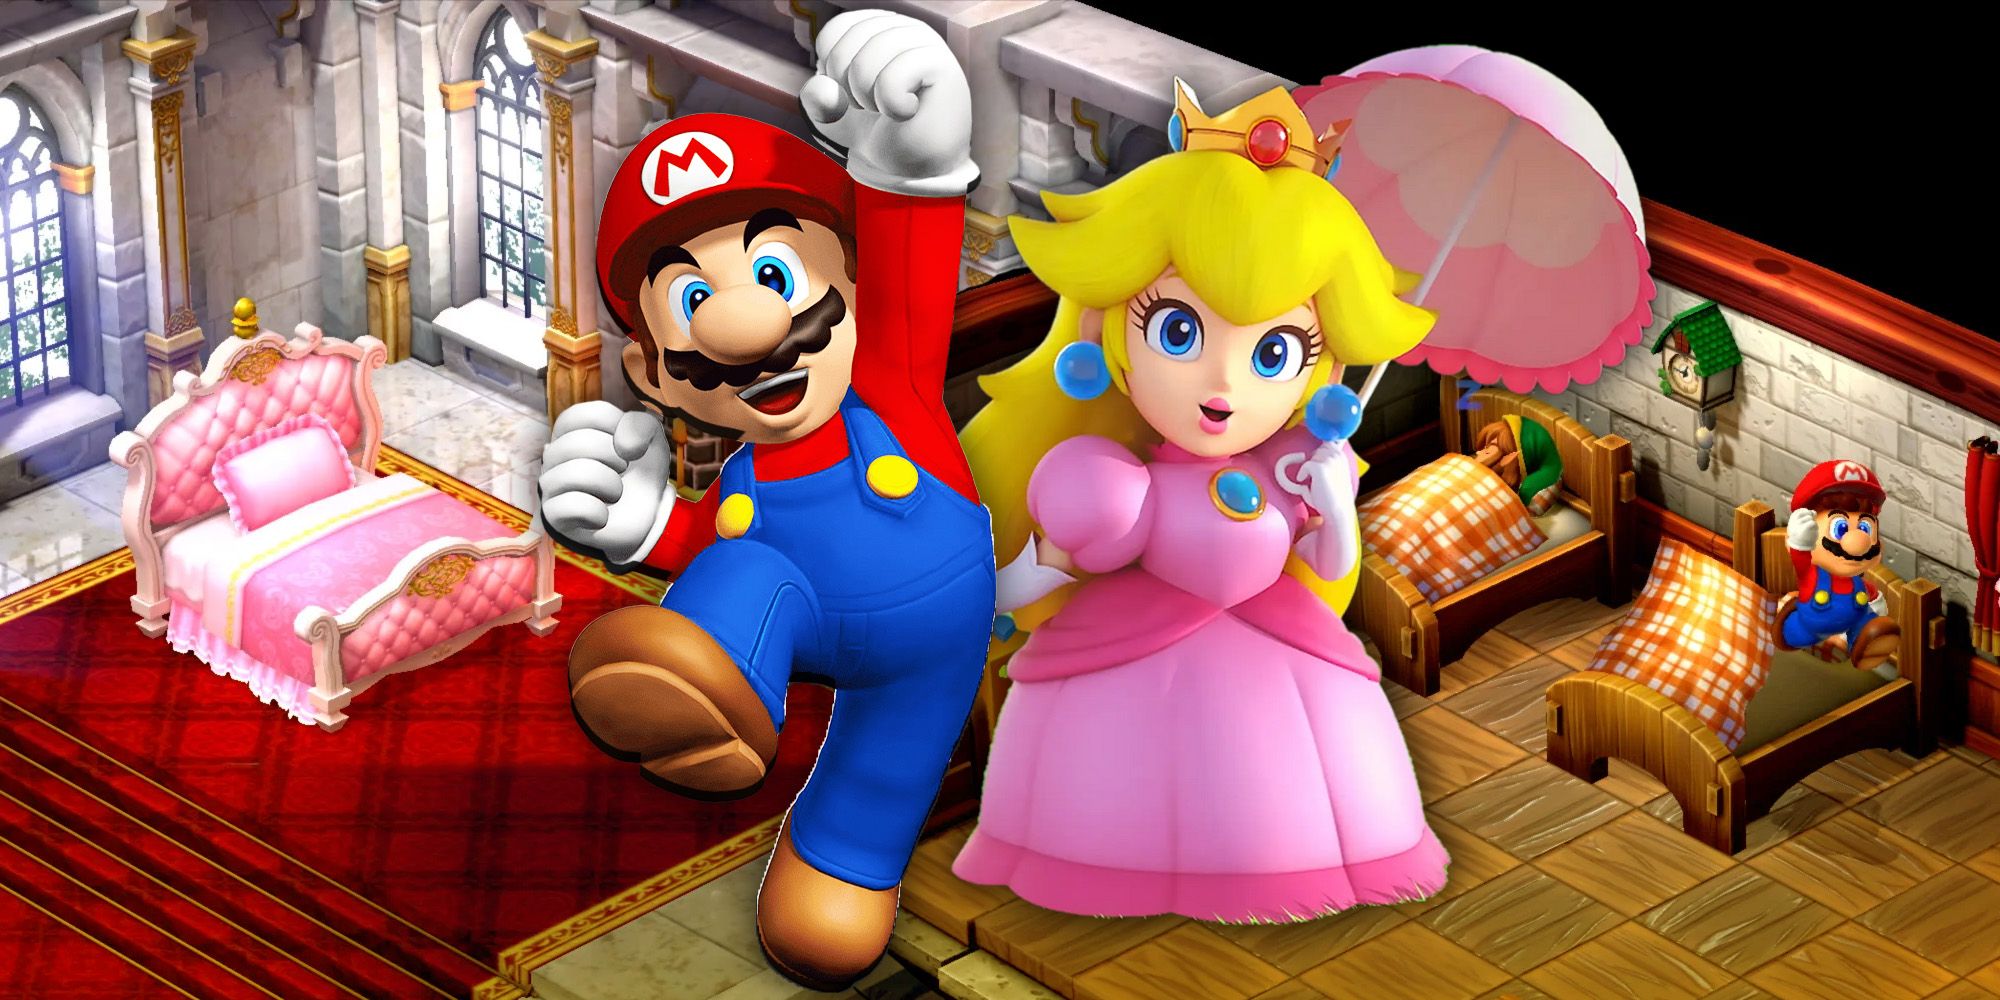 Super Mario RPG: How To Unlock Grate Guy's Casino